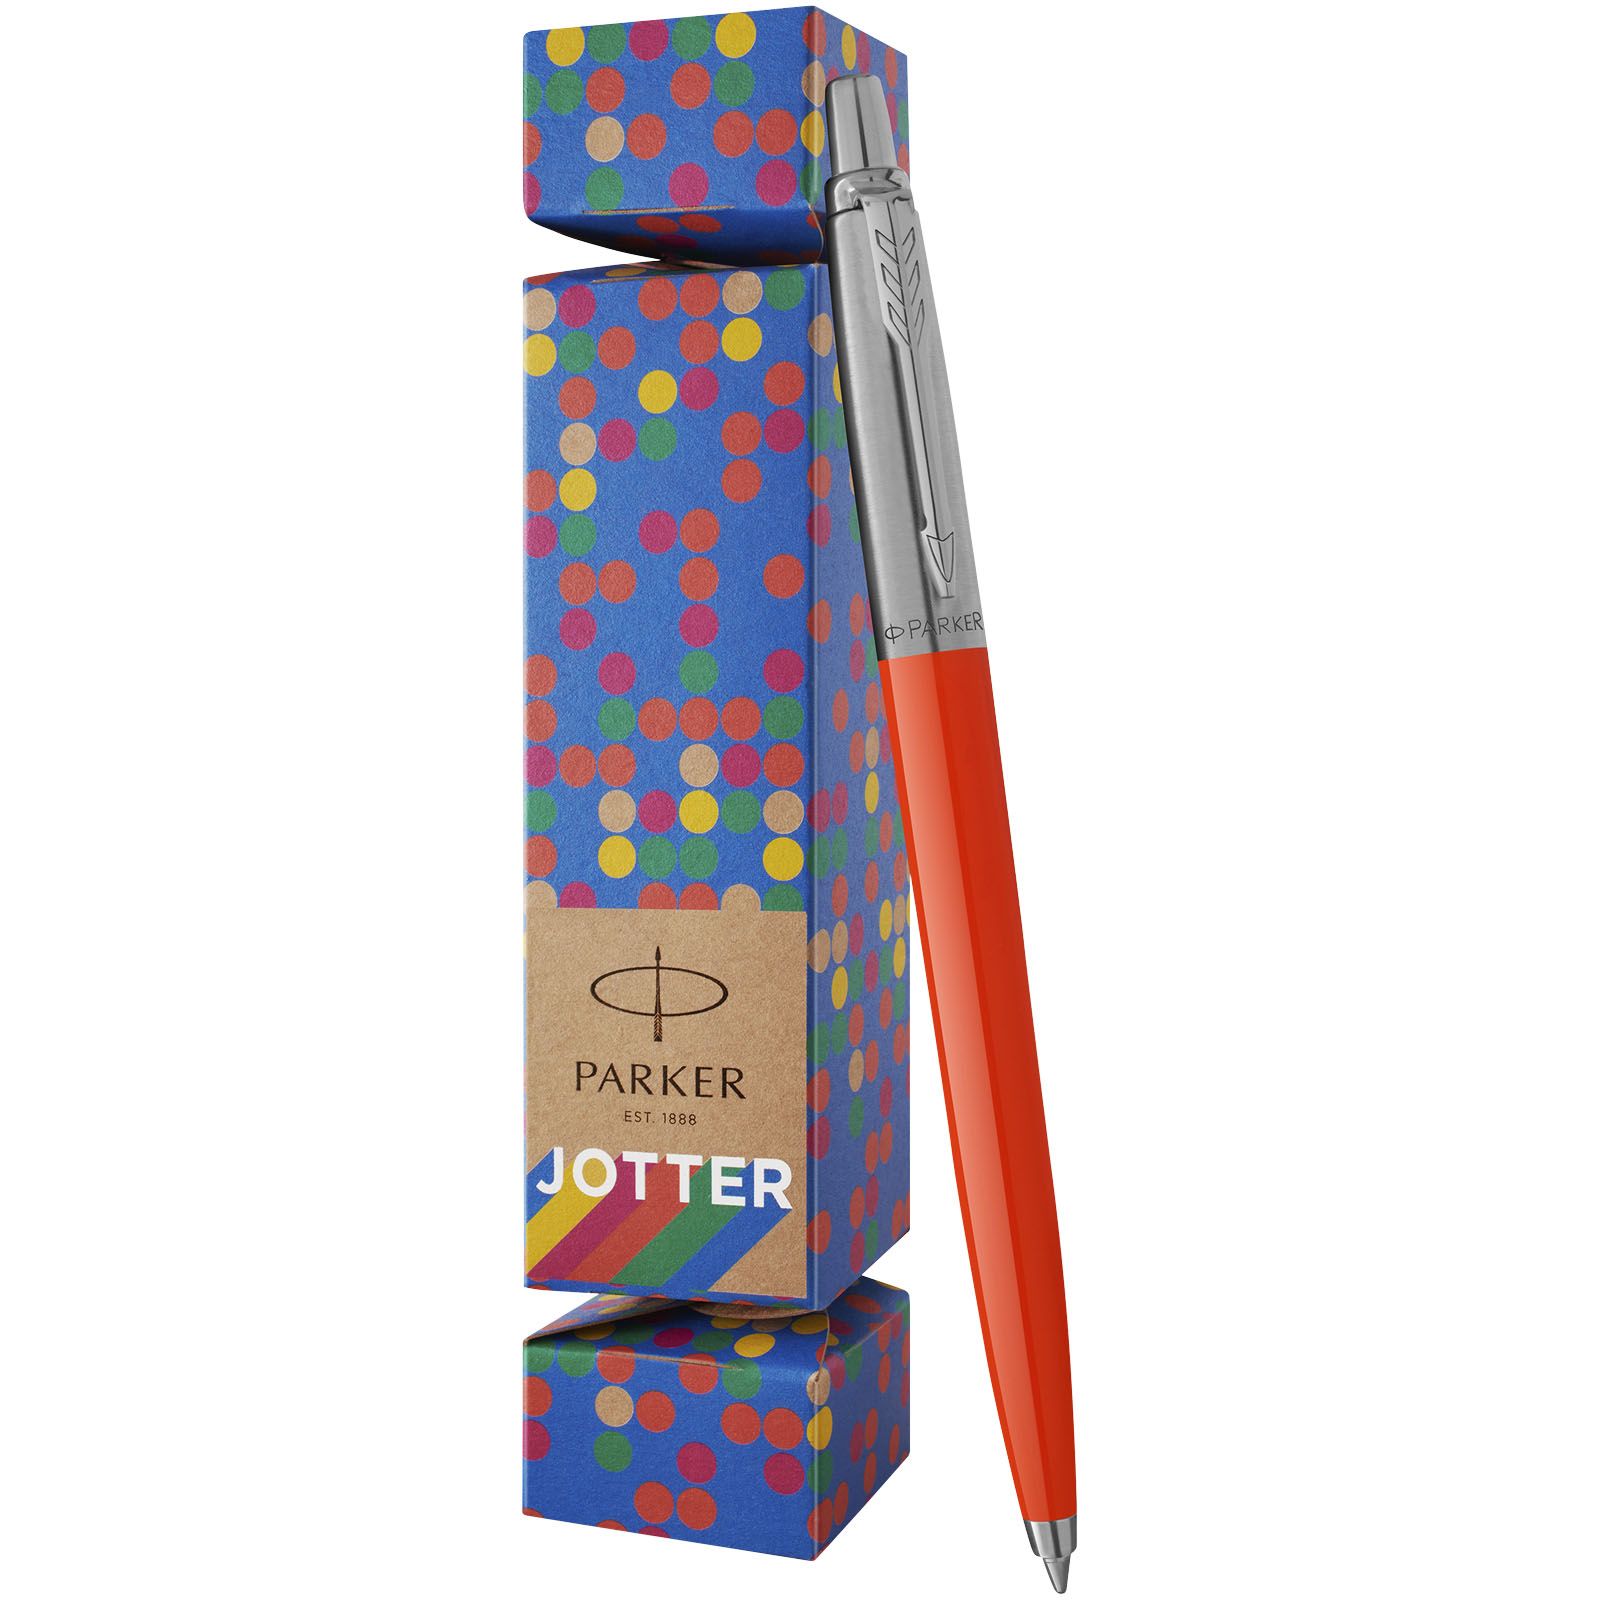 Advertising Gift sets - Parker Jotter Cracker Pen gift set